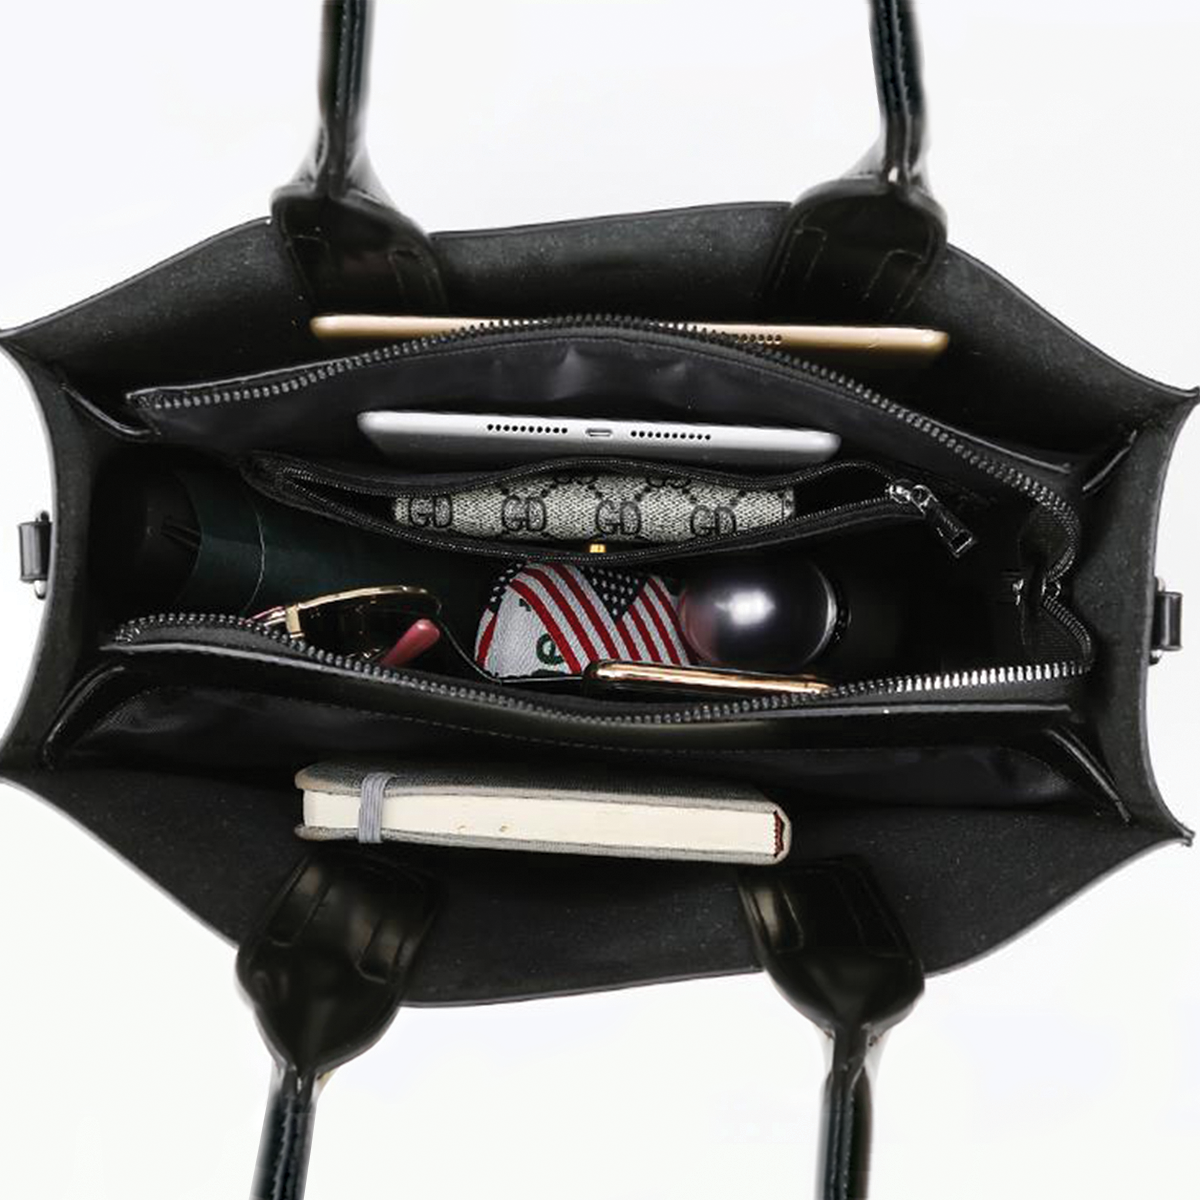 Weimaraner Luxury Handbag V1